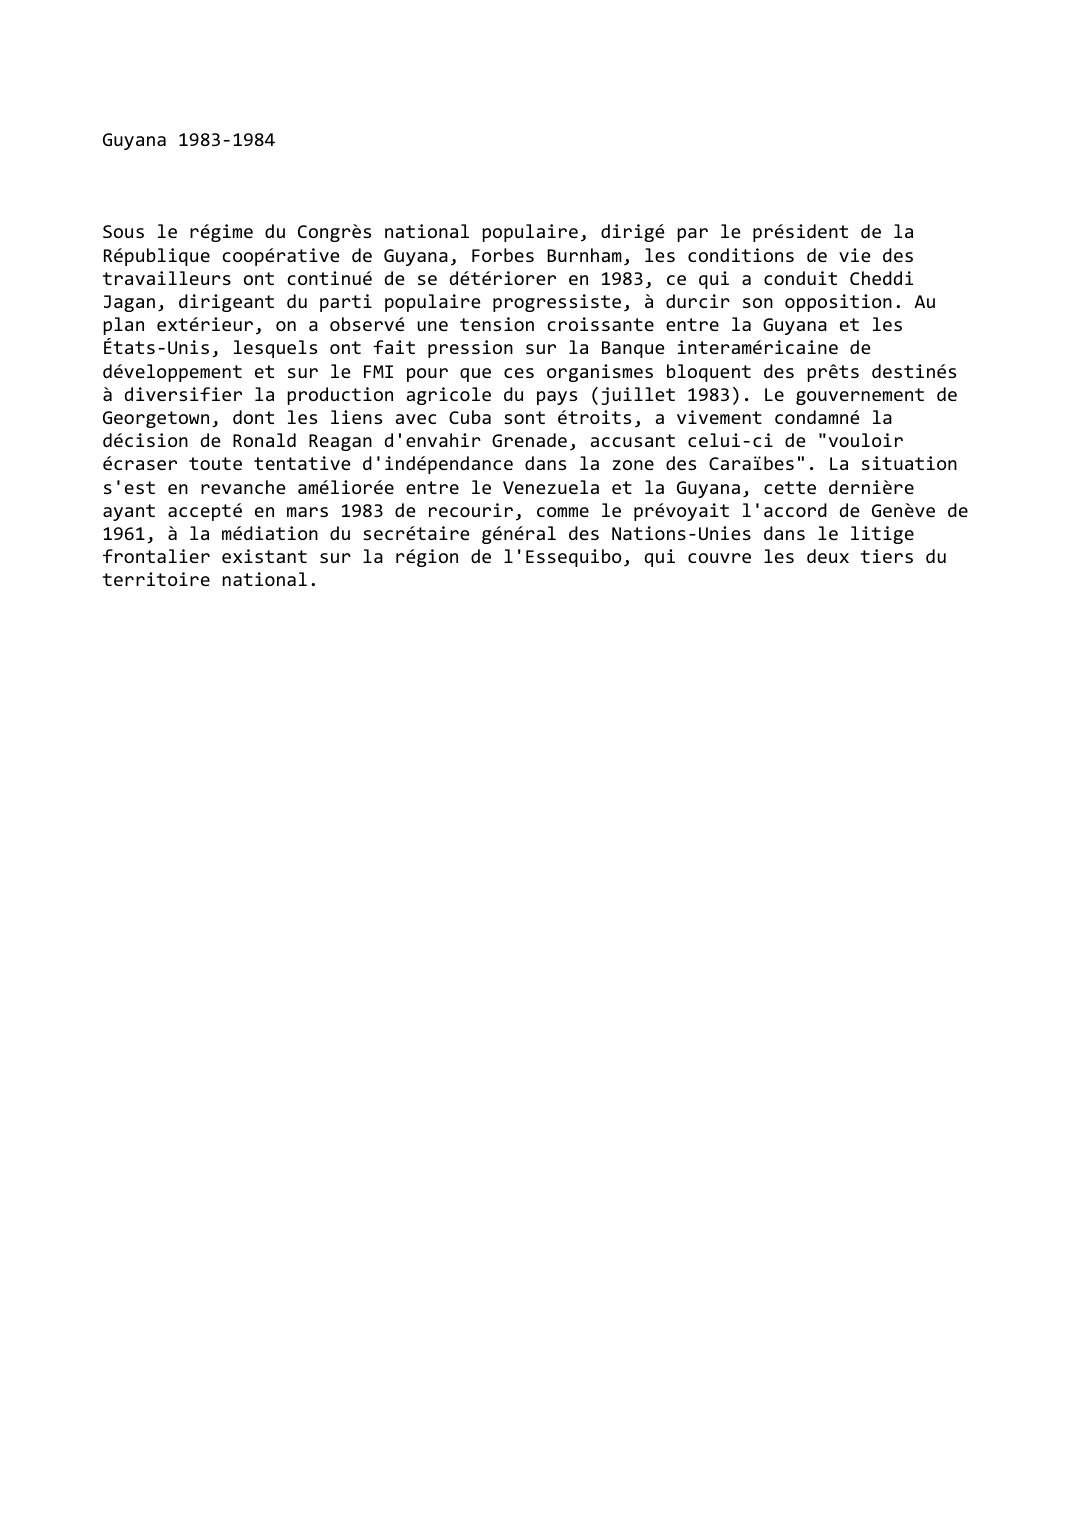 Prévisualisation du document Guyana (1983-1984)